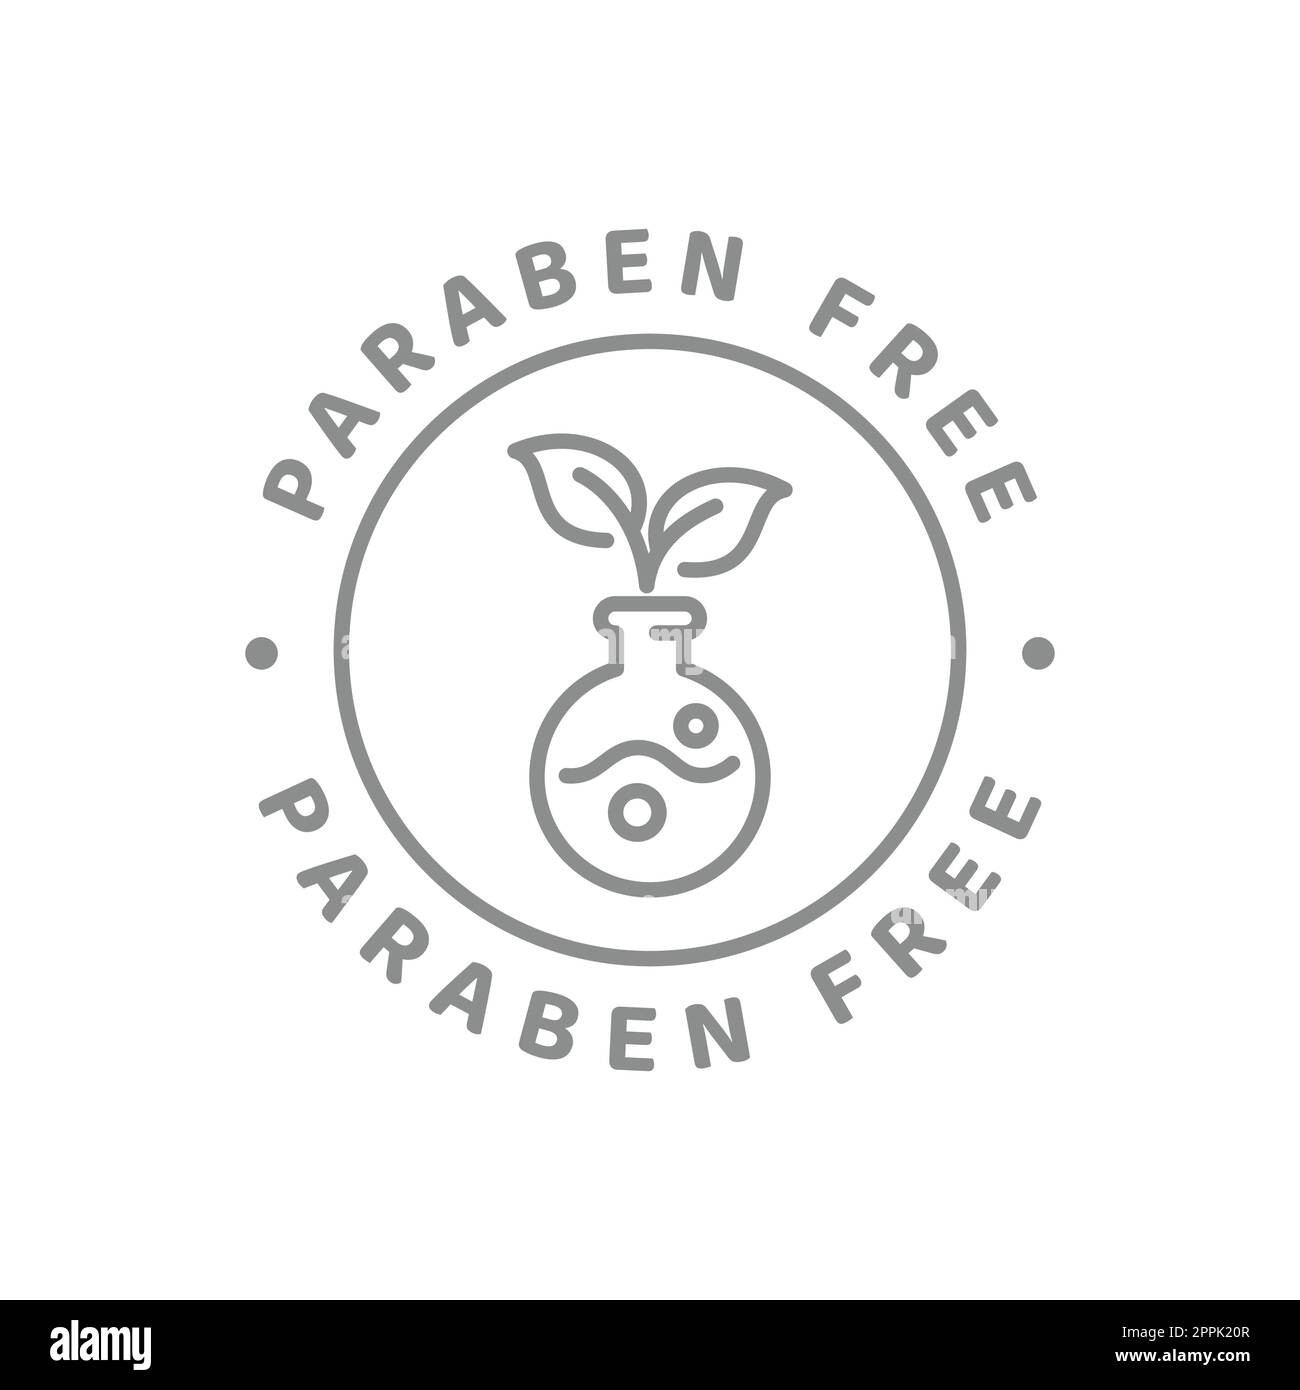 Paraben free vector icon. Ingredients label badge, no parabens. Stock Vector